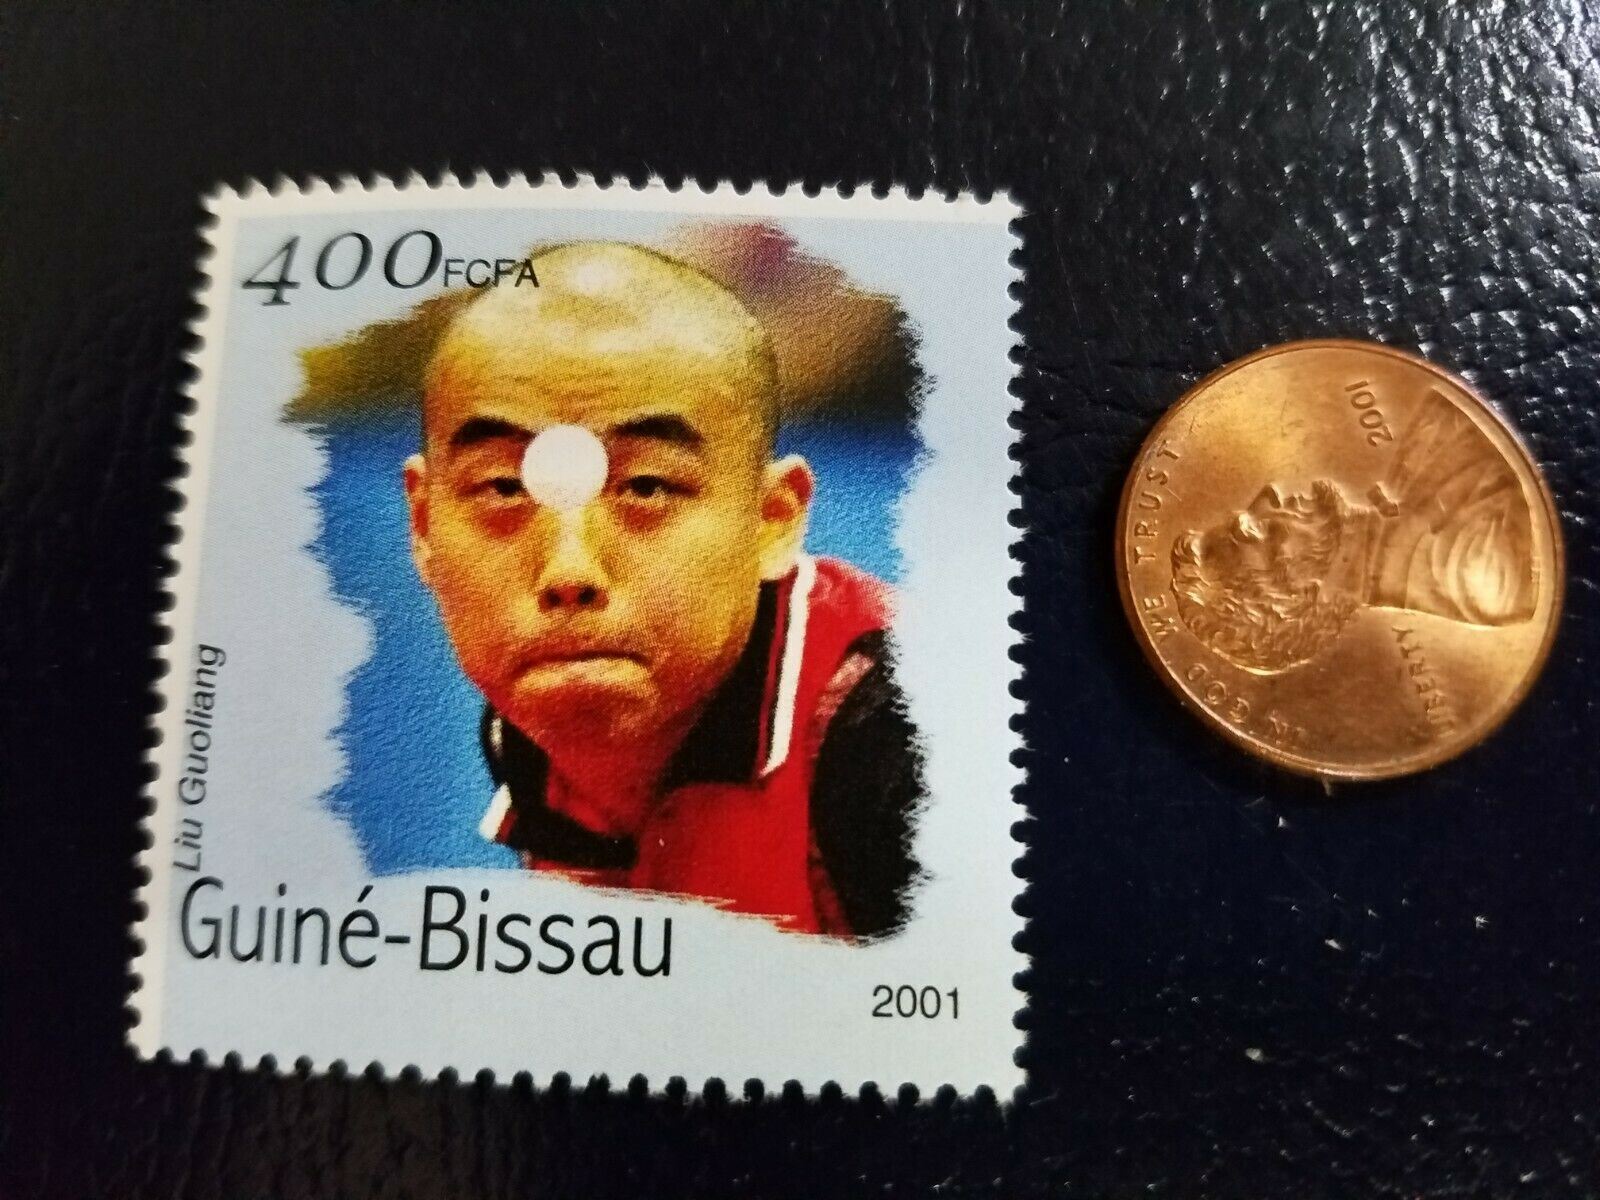 Liu Guoliang China Table Tennis Ping Pong Olympic Guine-bissau 2001 Stamp